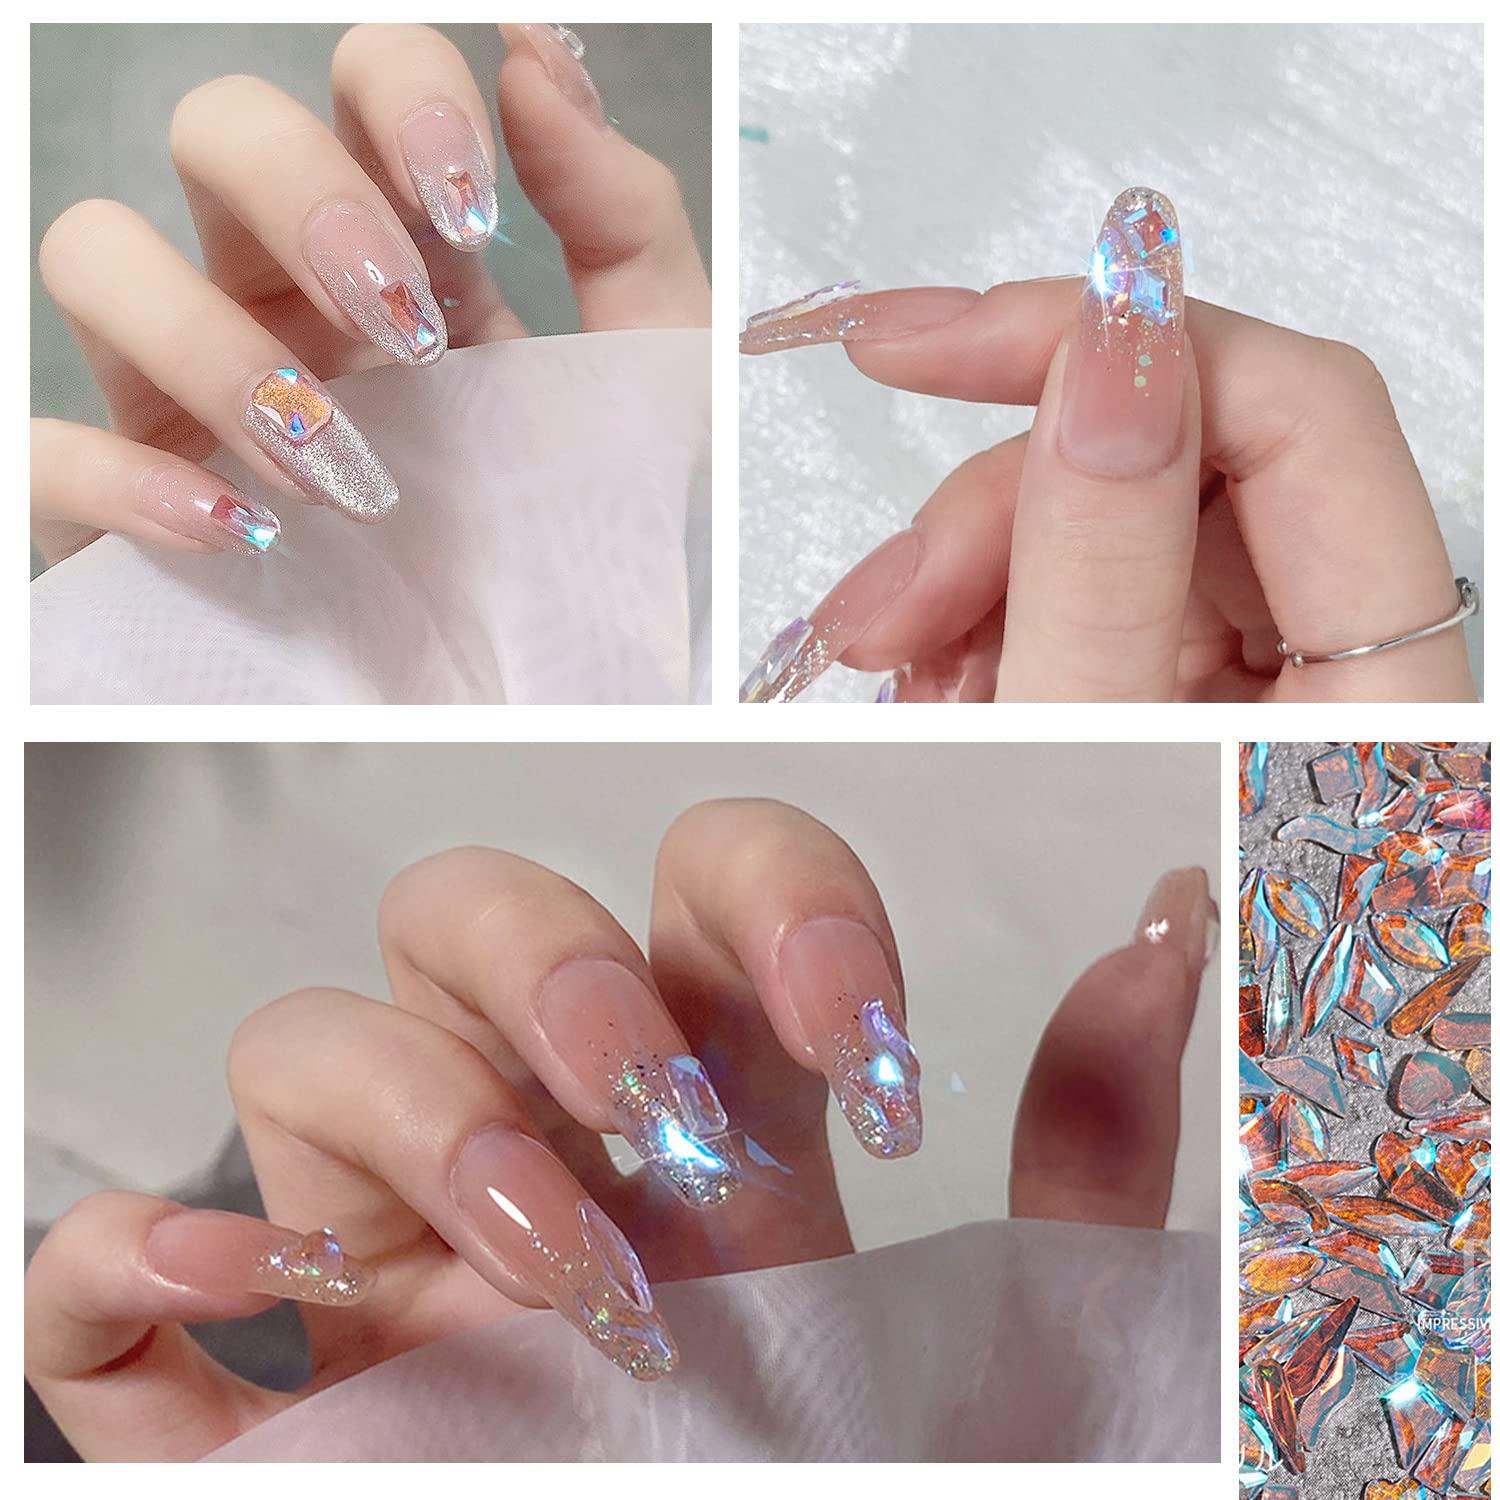 HINABTRU Clear Crystal Rhinestones for Nail Art-Silver Nail Gems Small  Glass Diamonds Stone Flatback-Nail Crystals for Acrylic Nails-Nail Bling  Charms